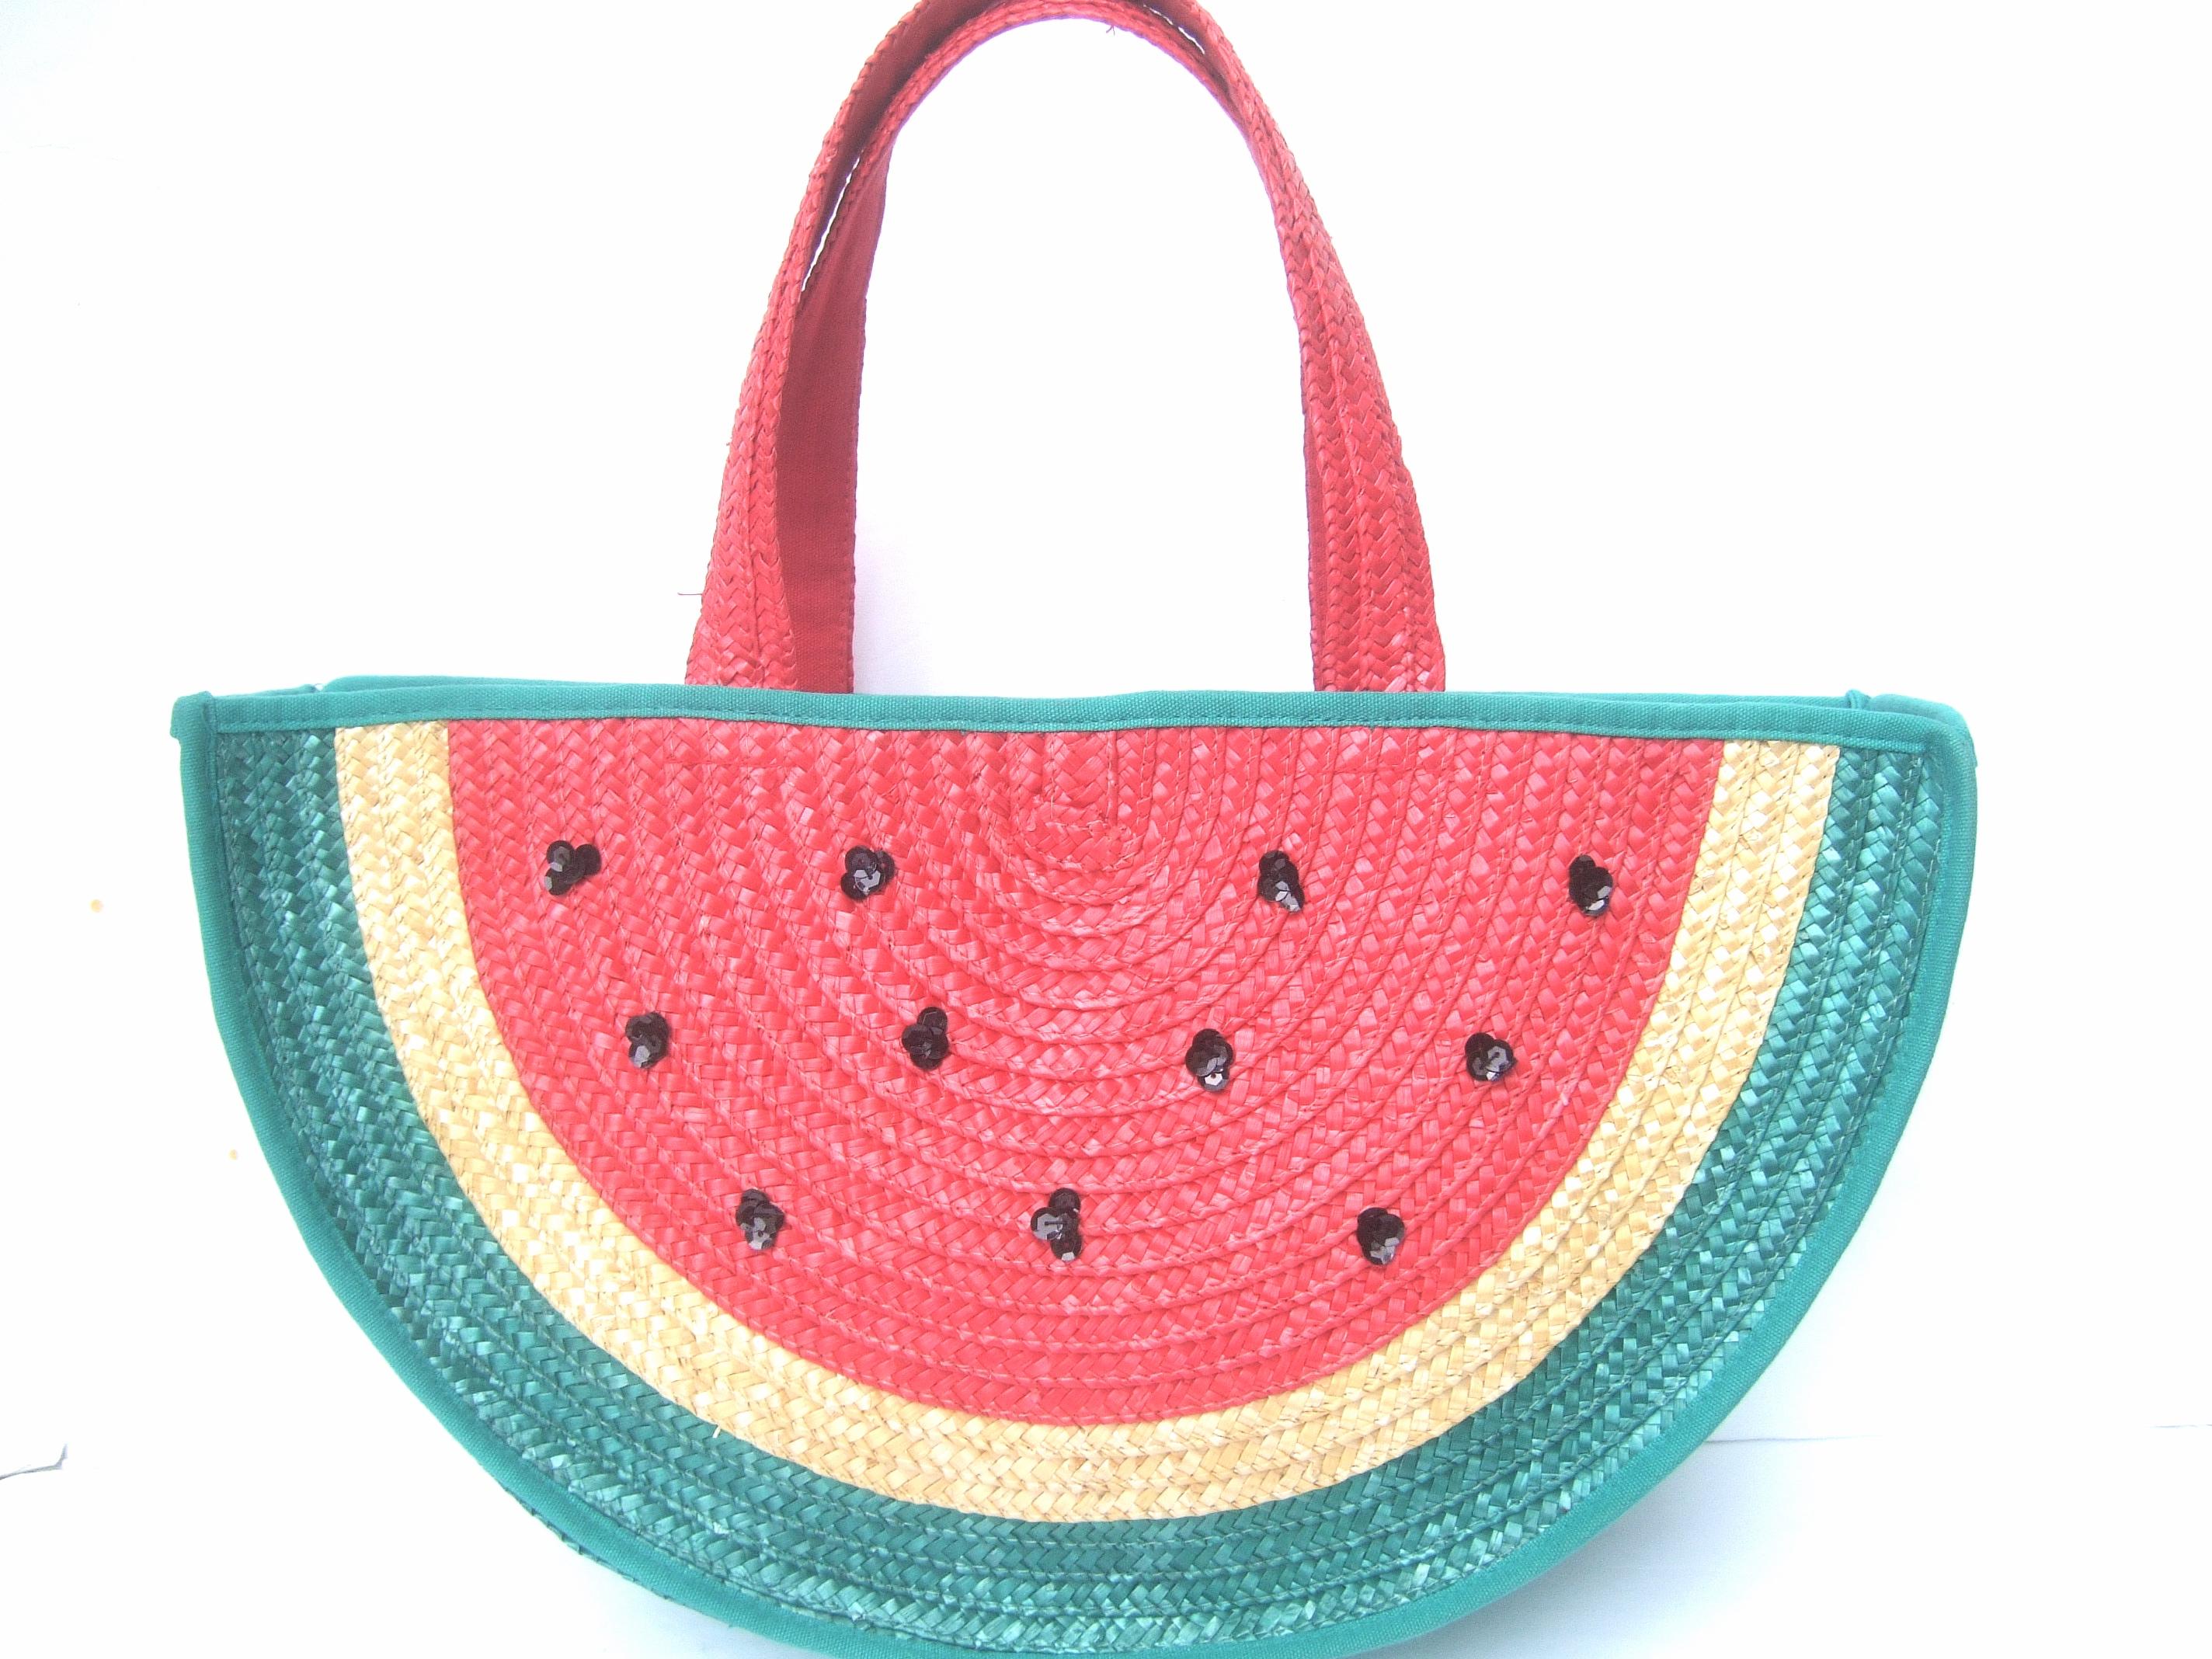 Lulu Guinness London Whimsical Watermelon Tote Handbag c 1990s 1